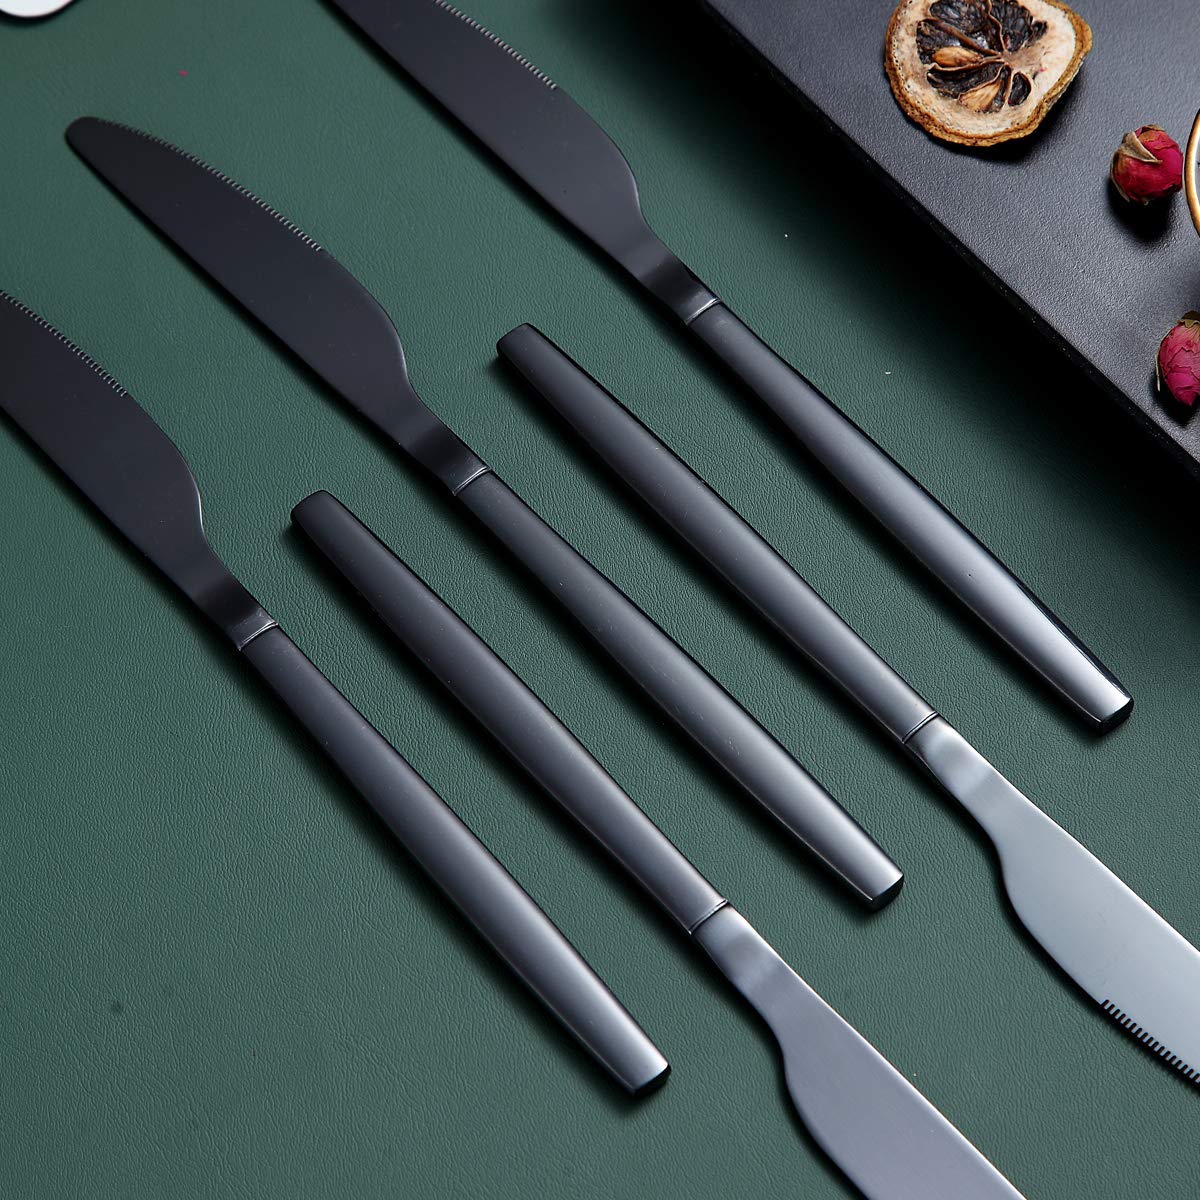 Berglander Black Dinner Knives Set Of 12, Titanium Shiny Black Plating Stainless Steel Dinner Knife, Butter Knife Table Knives Dishwasher Safe